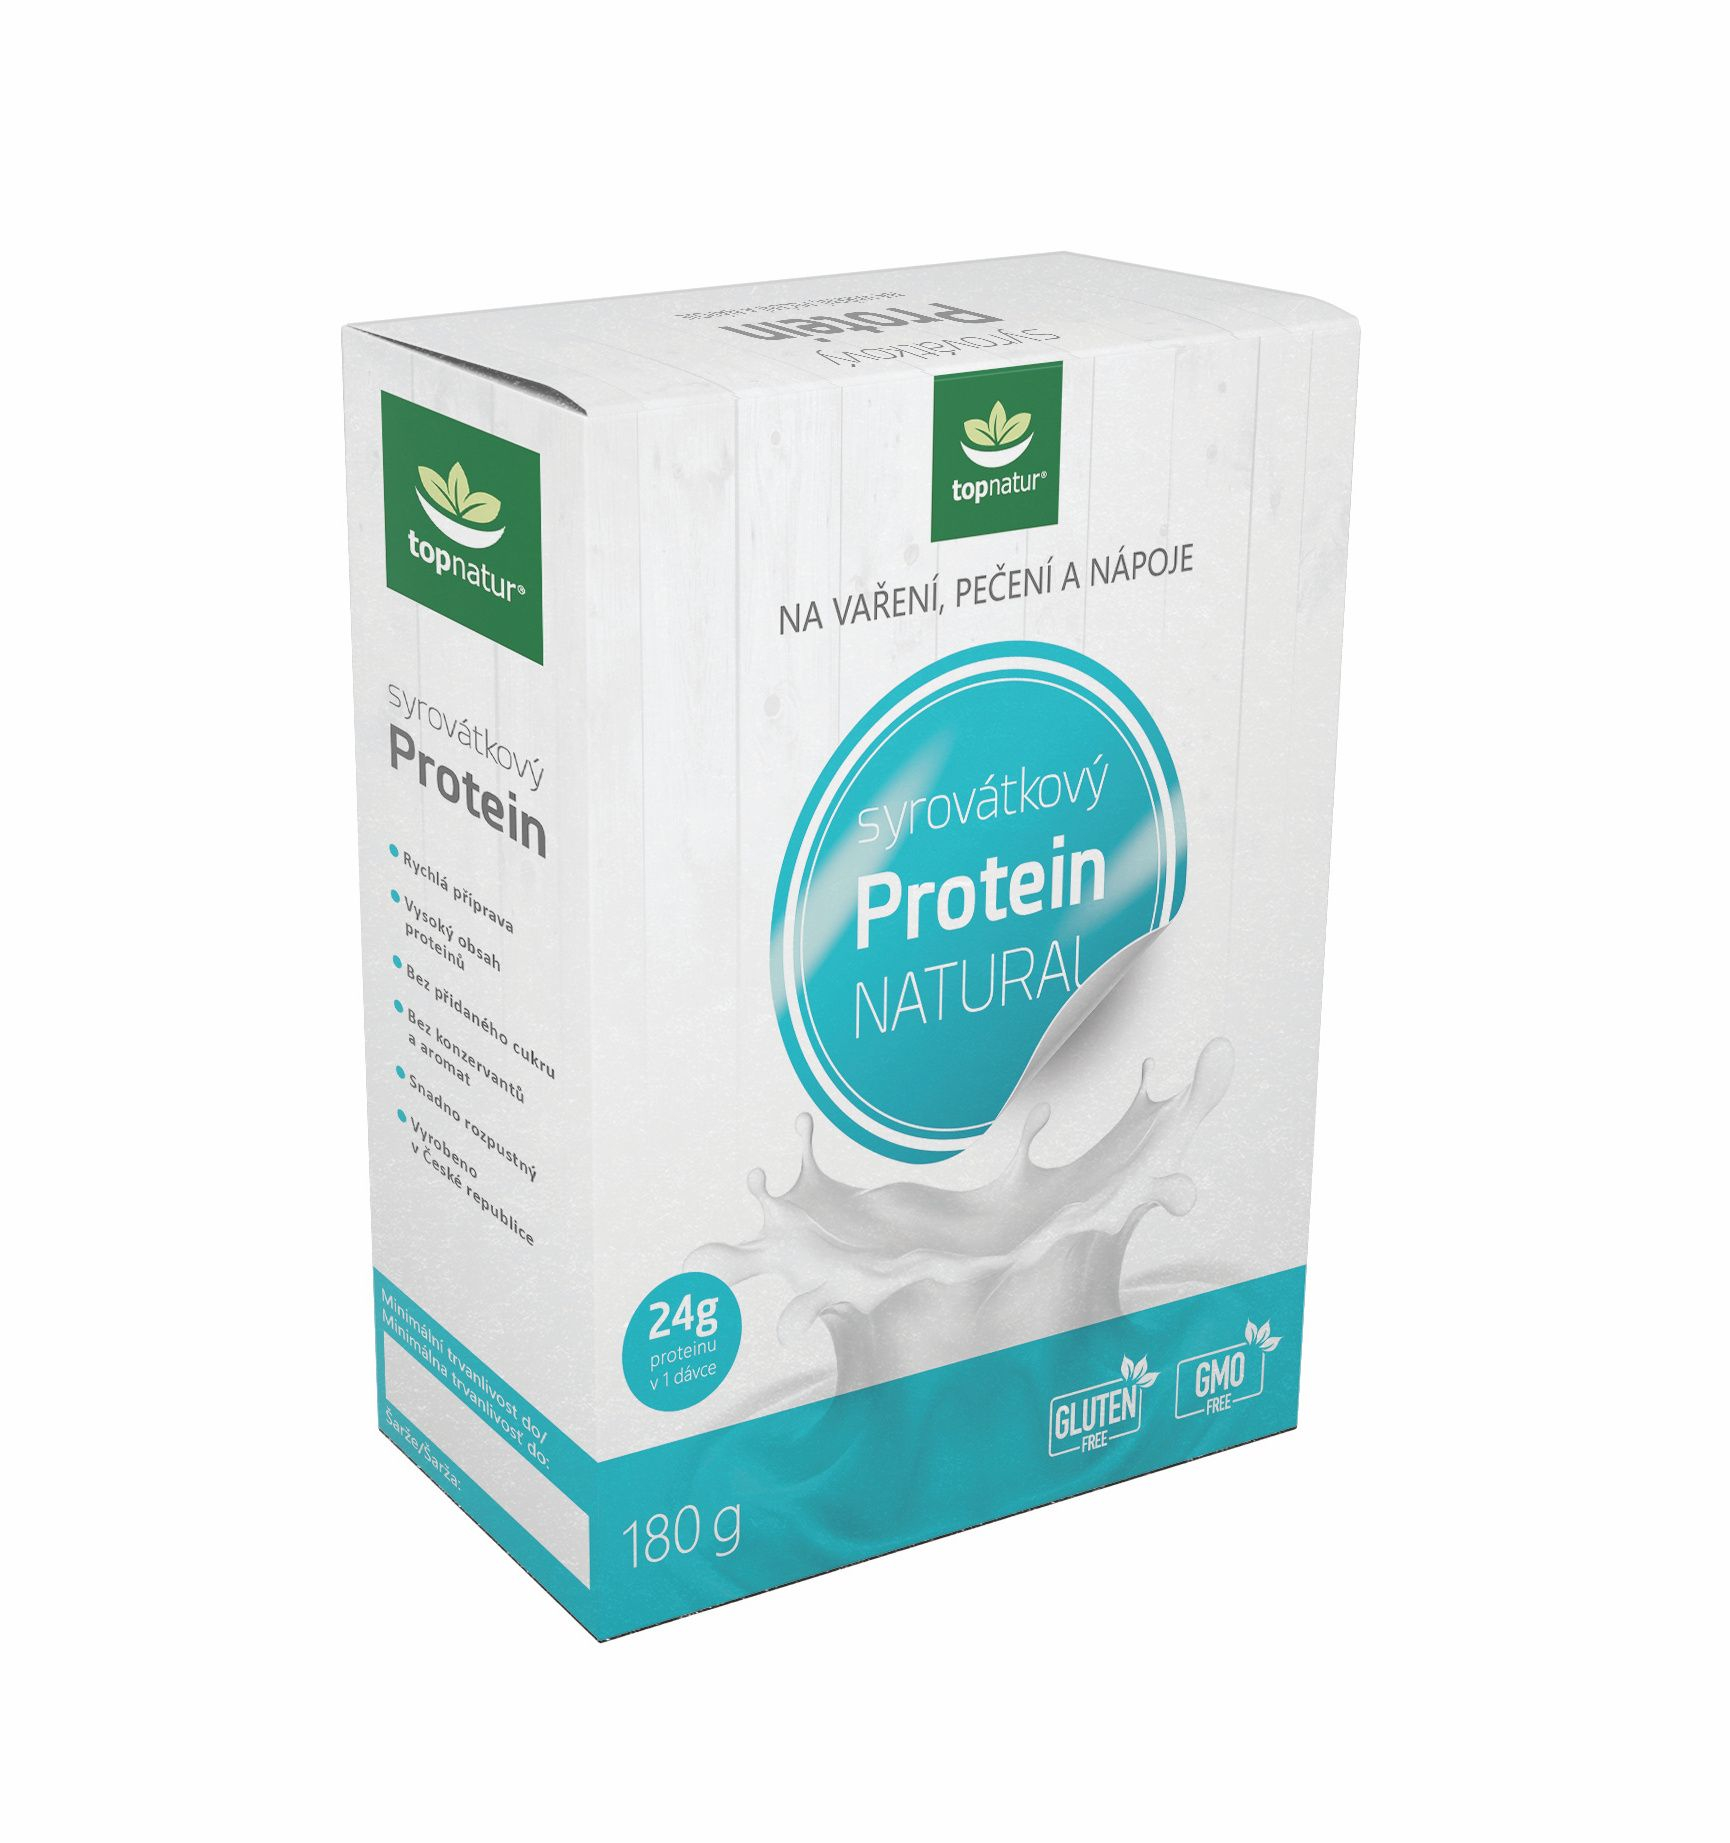 Topnatur Protein syrovátkový 180 g Topnatur